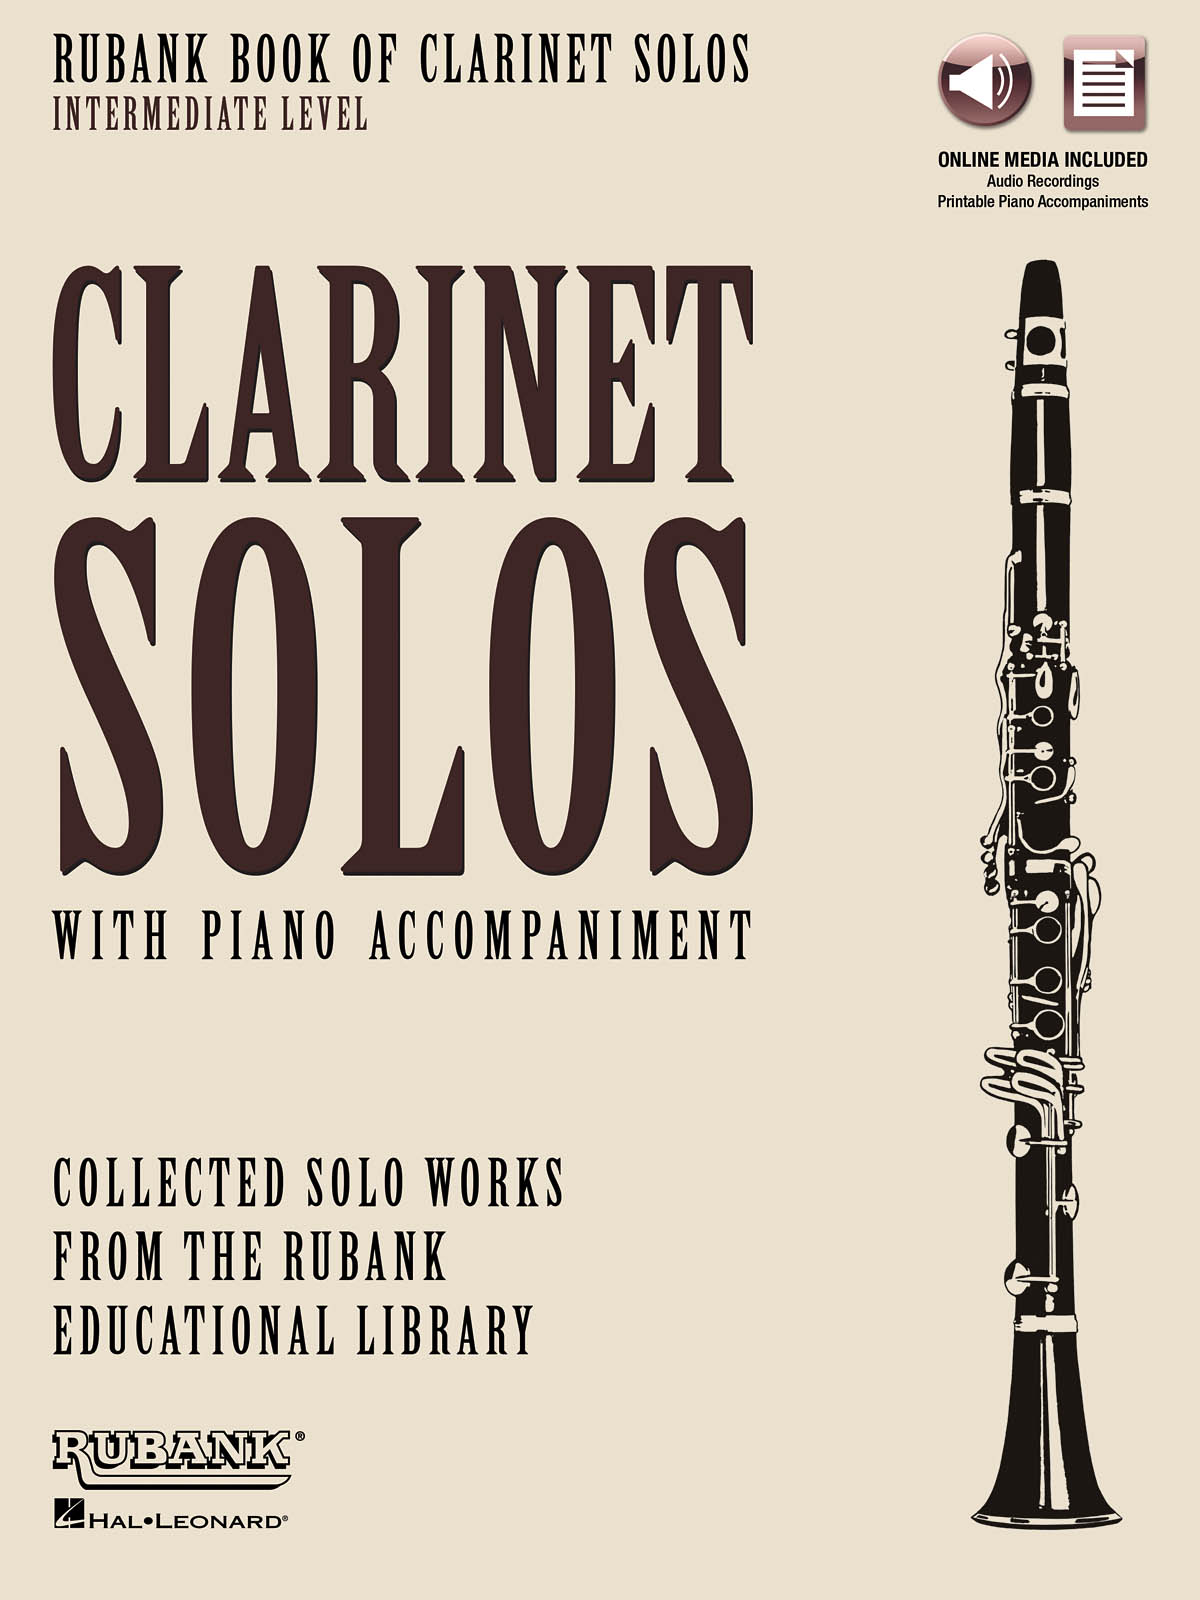 Rubank Book of Clarinet Solos - Intermediate Level - with Piano Accompaniment